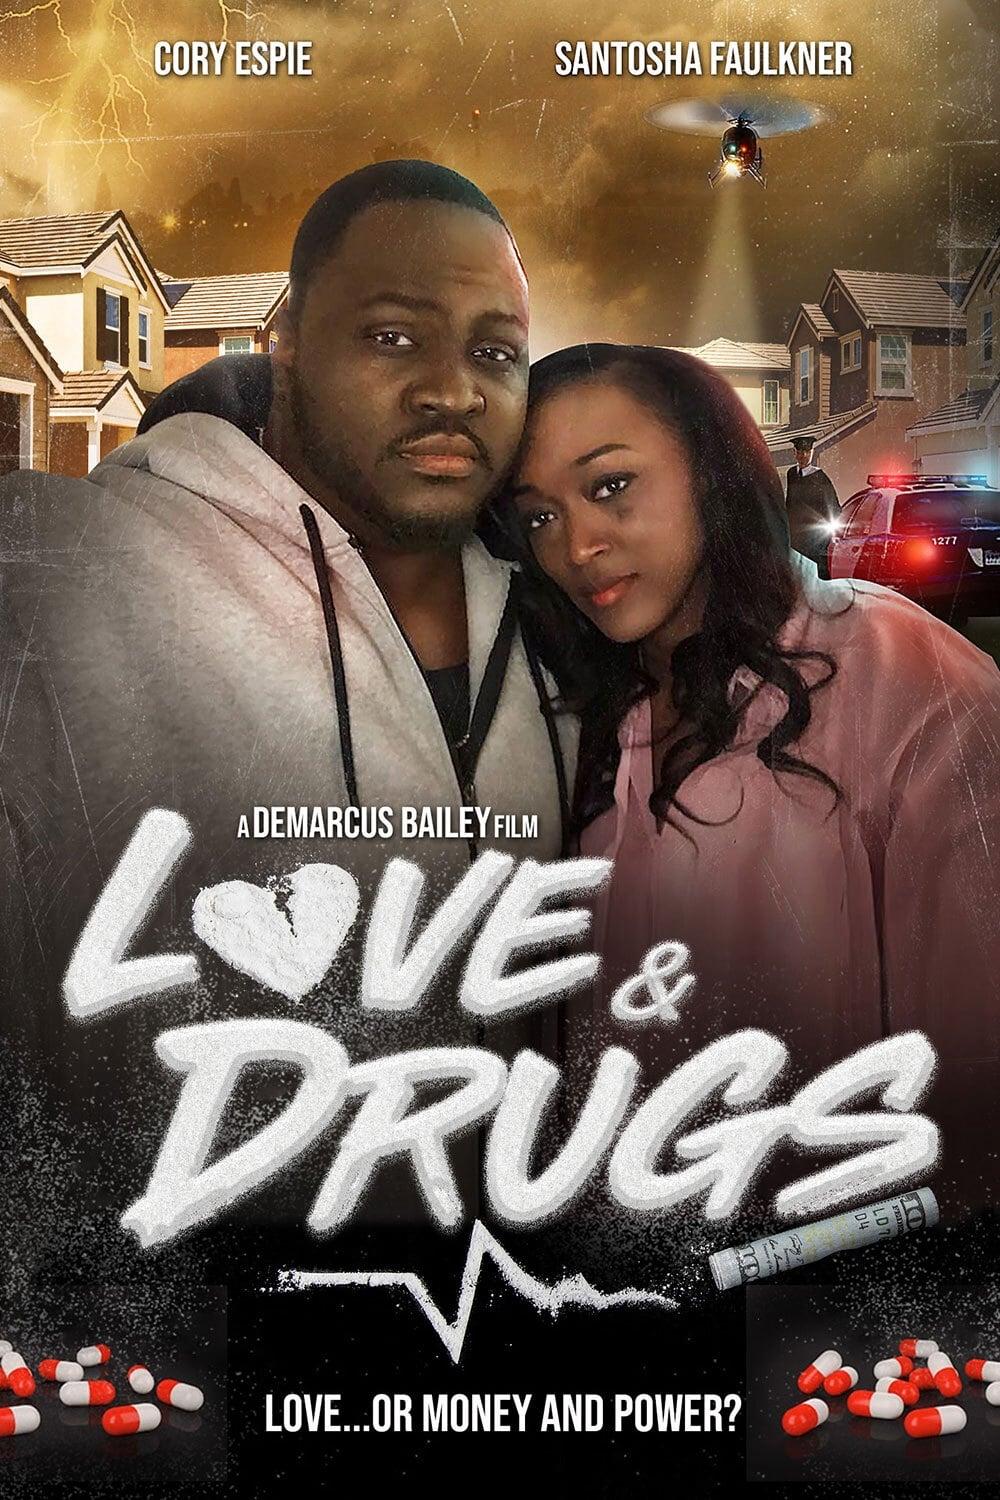 Love & Drugs poster